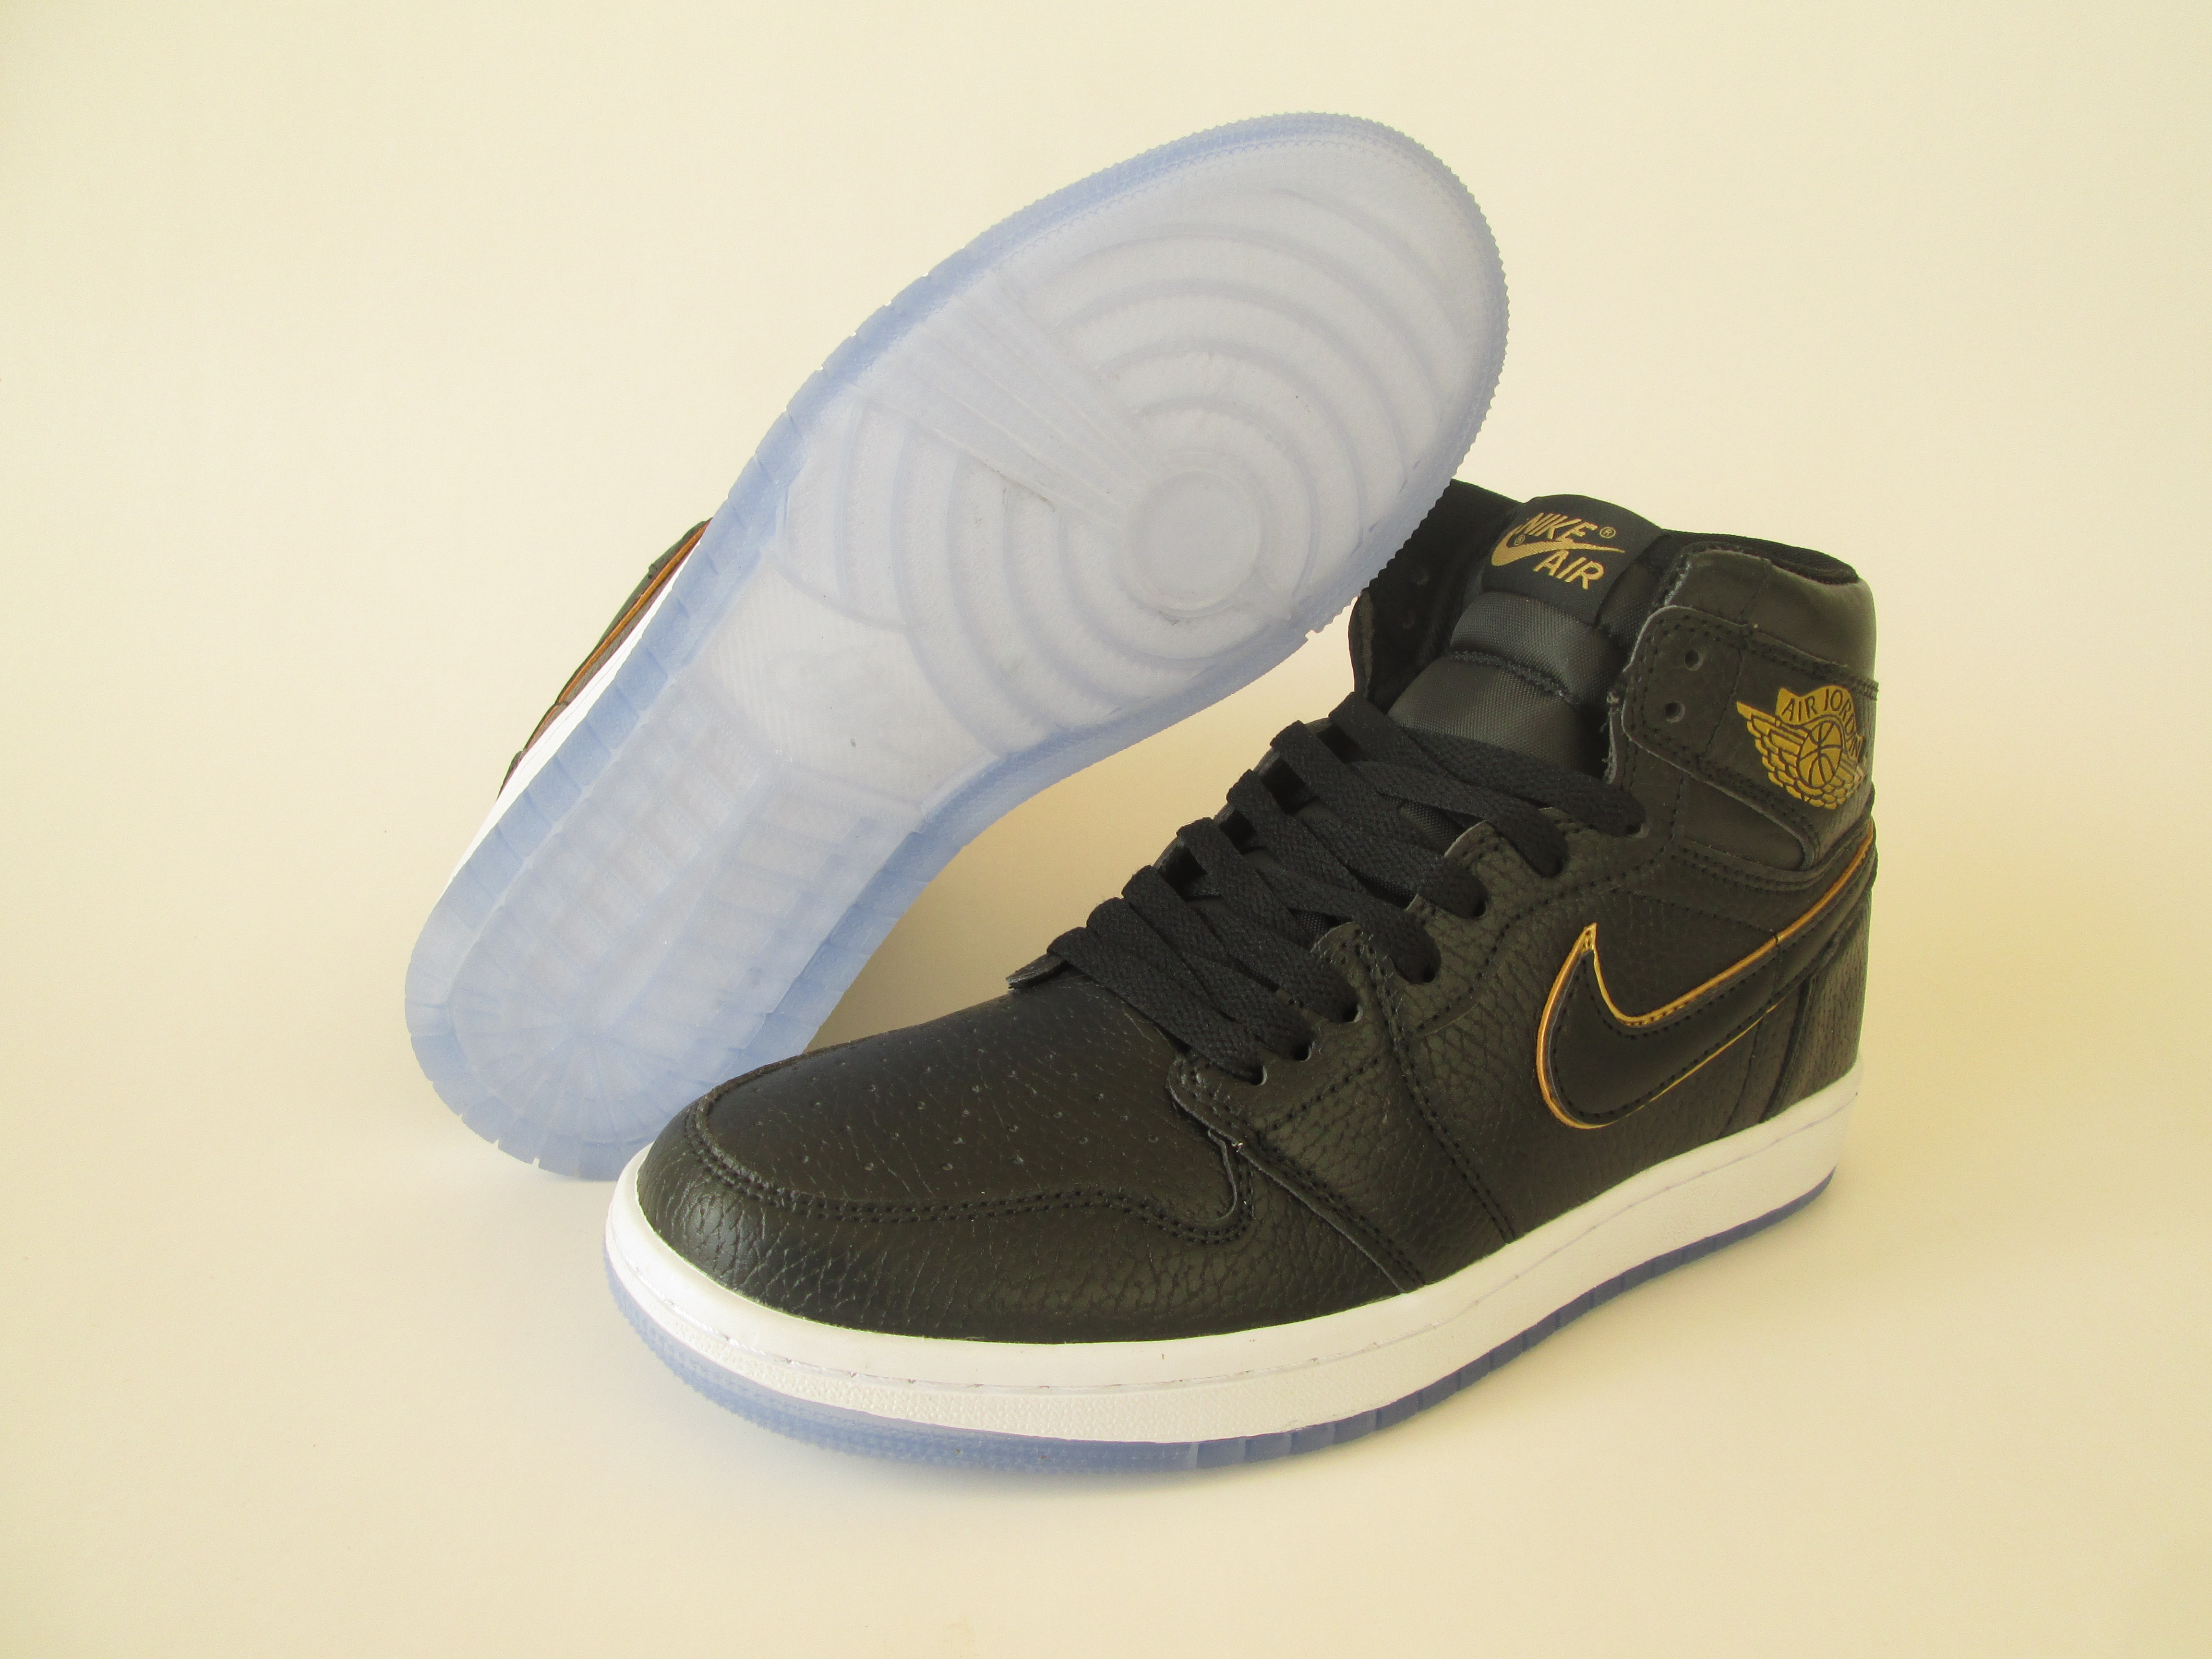 New Air Jordan 1 All Star Black Gold Shoes